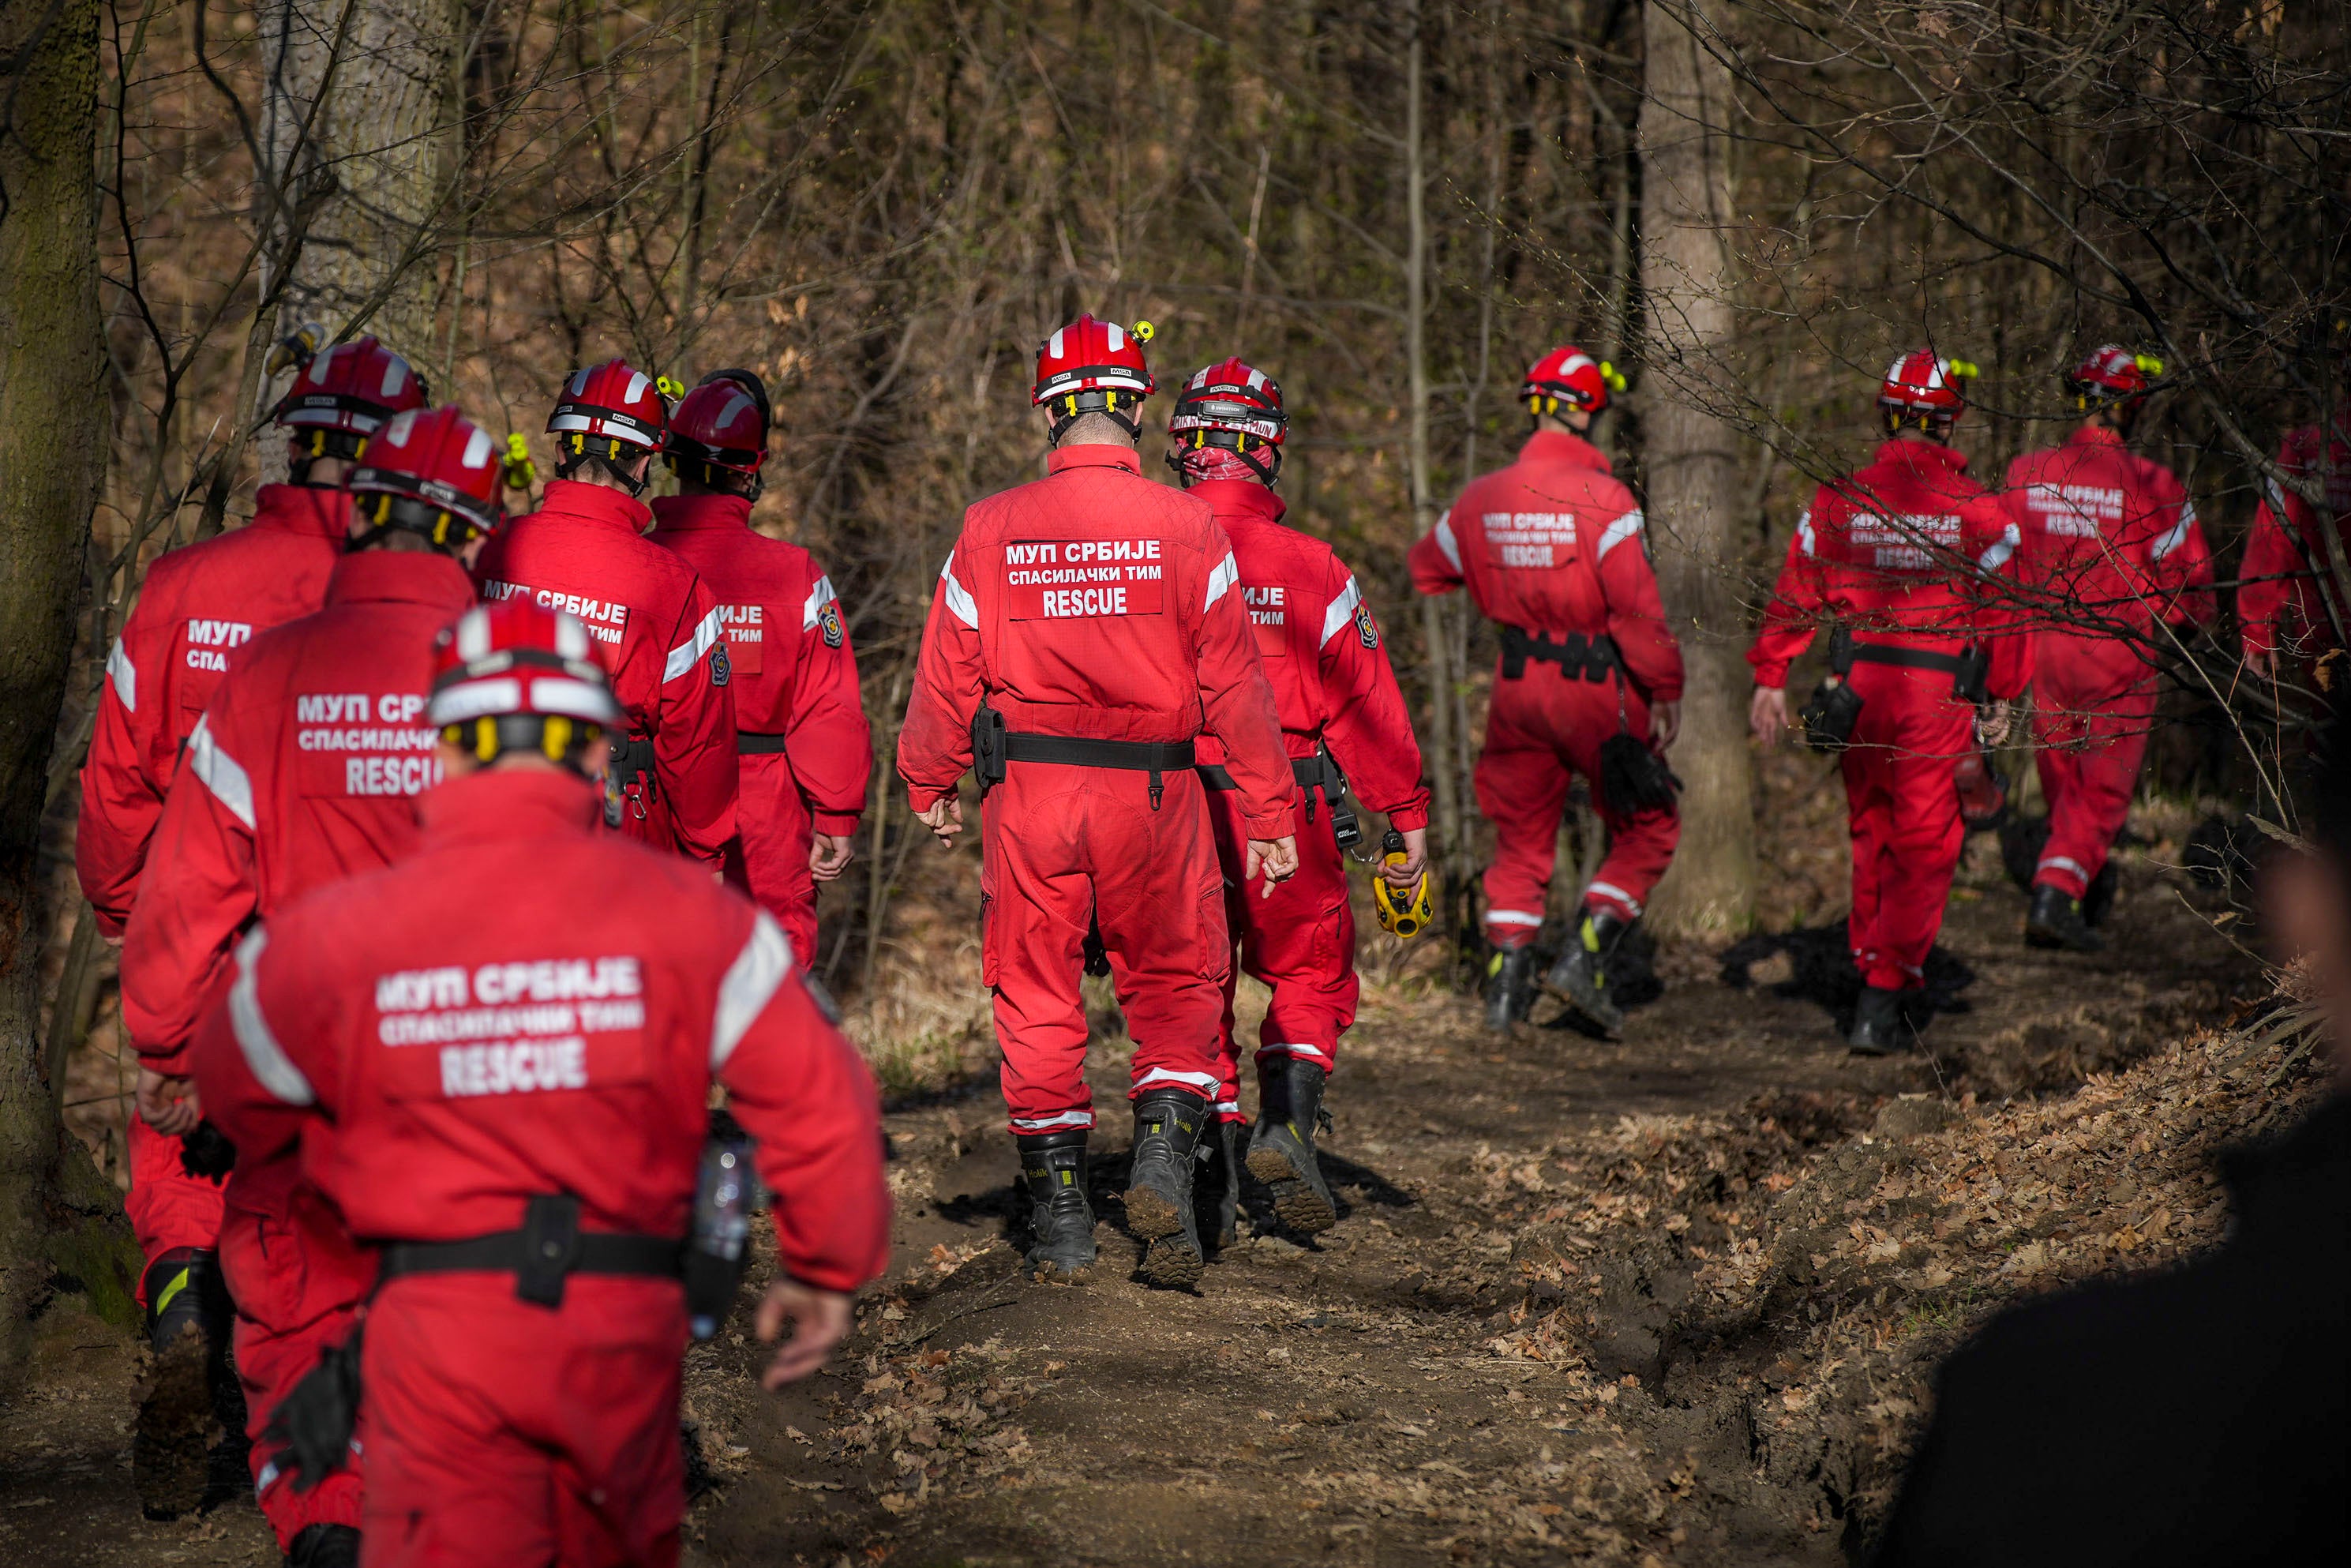 Serbian Police Rescue team search a forest near Bor